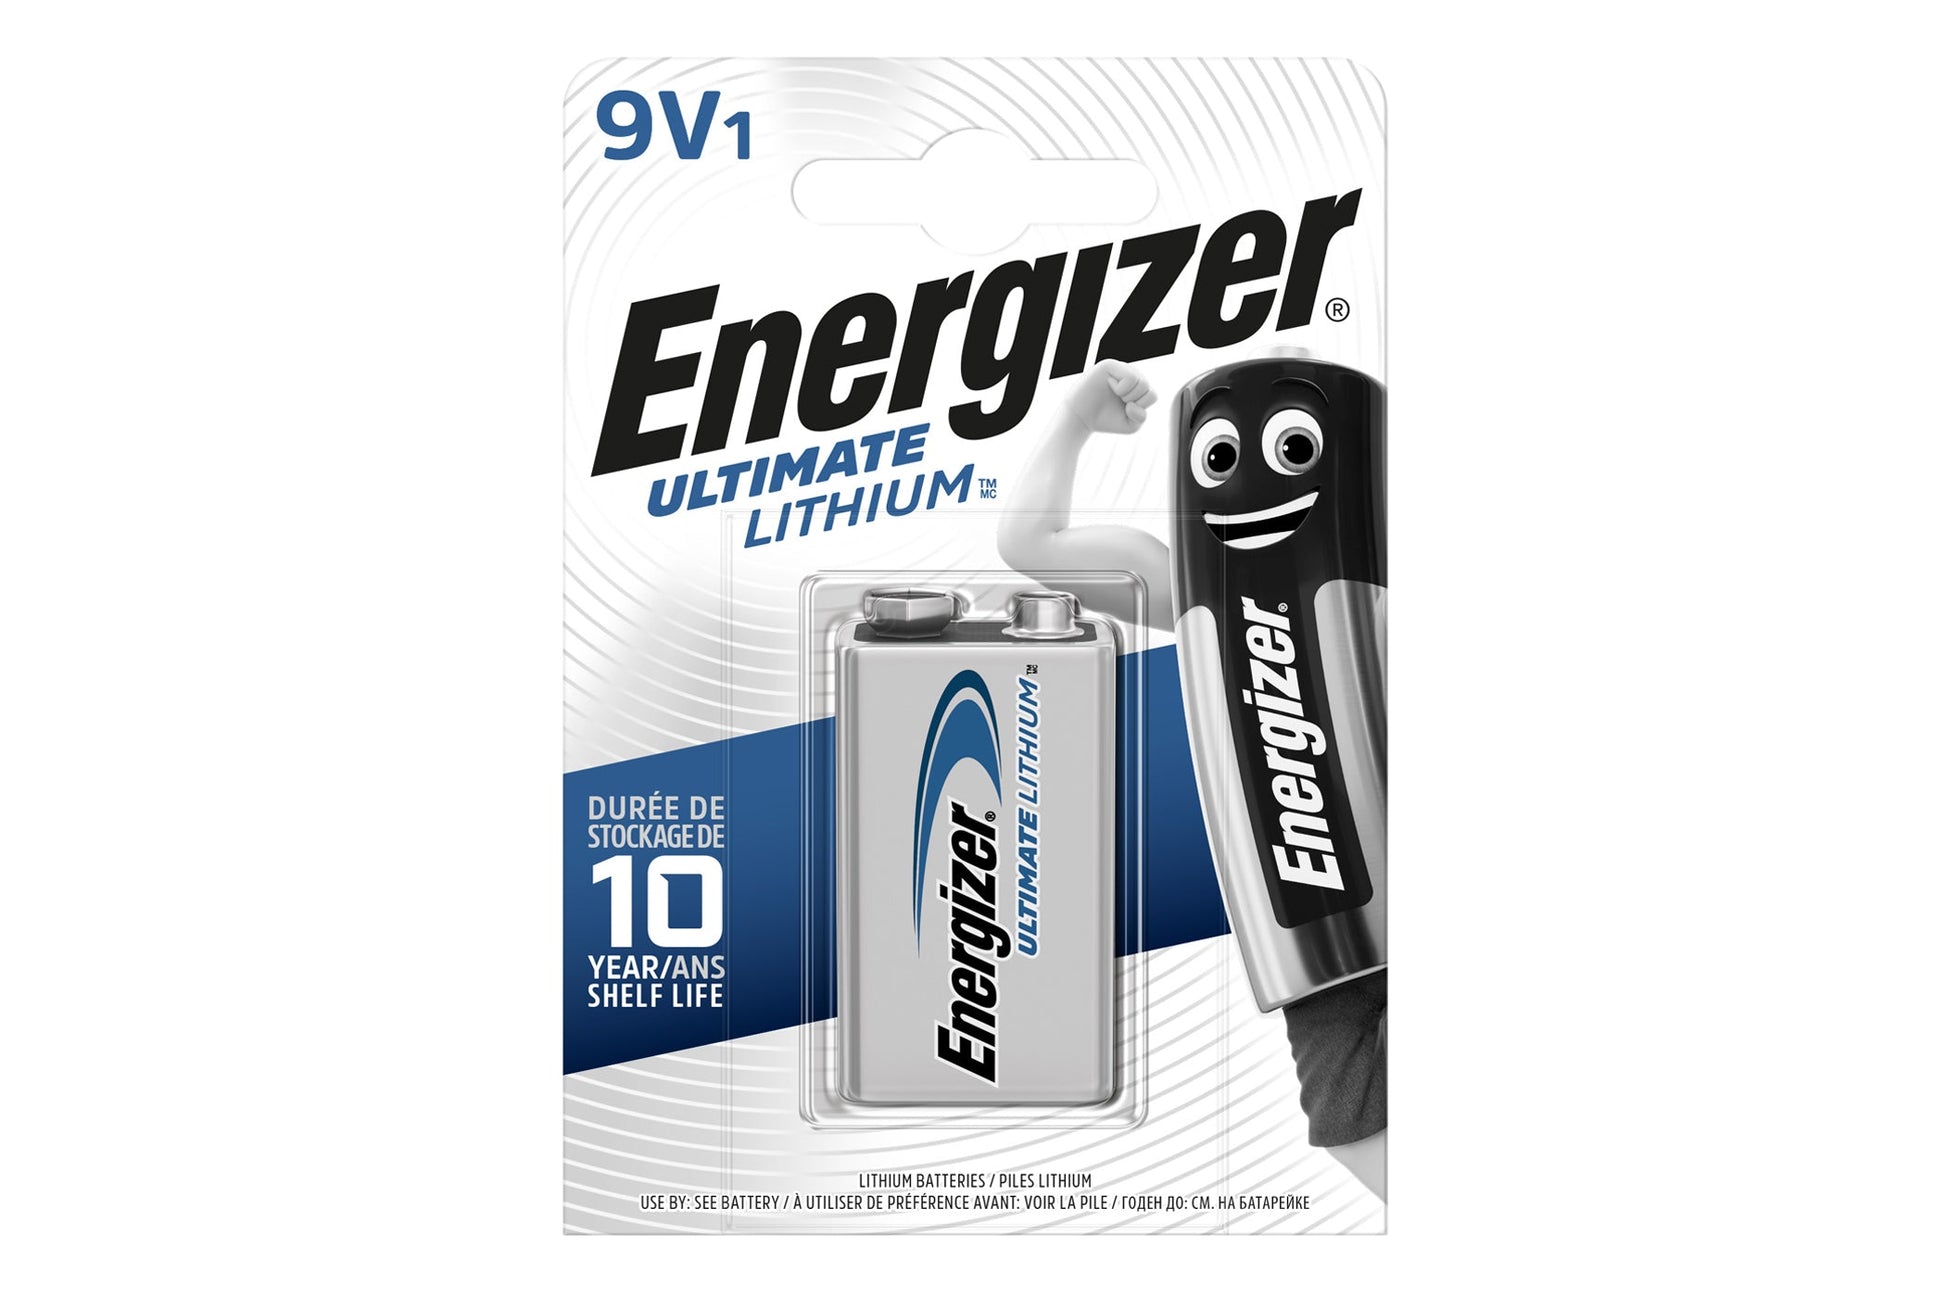 Energizer 9V Ultimate Lithium Battery - maplin.co.uk